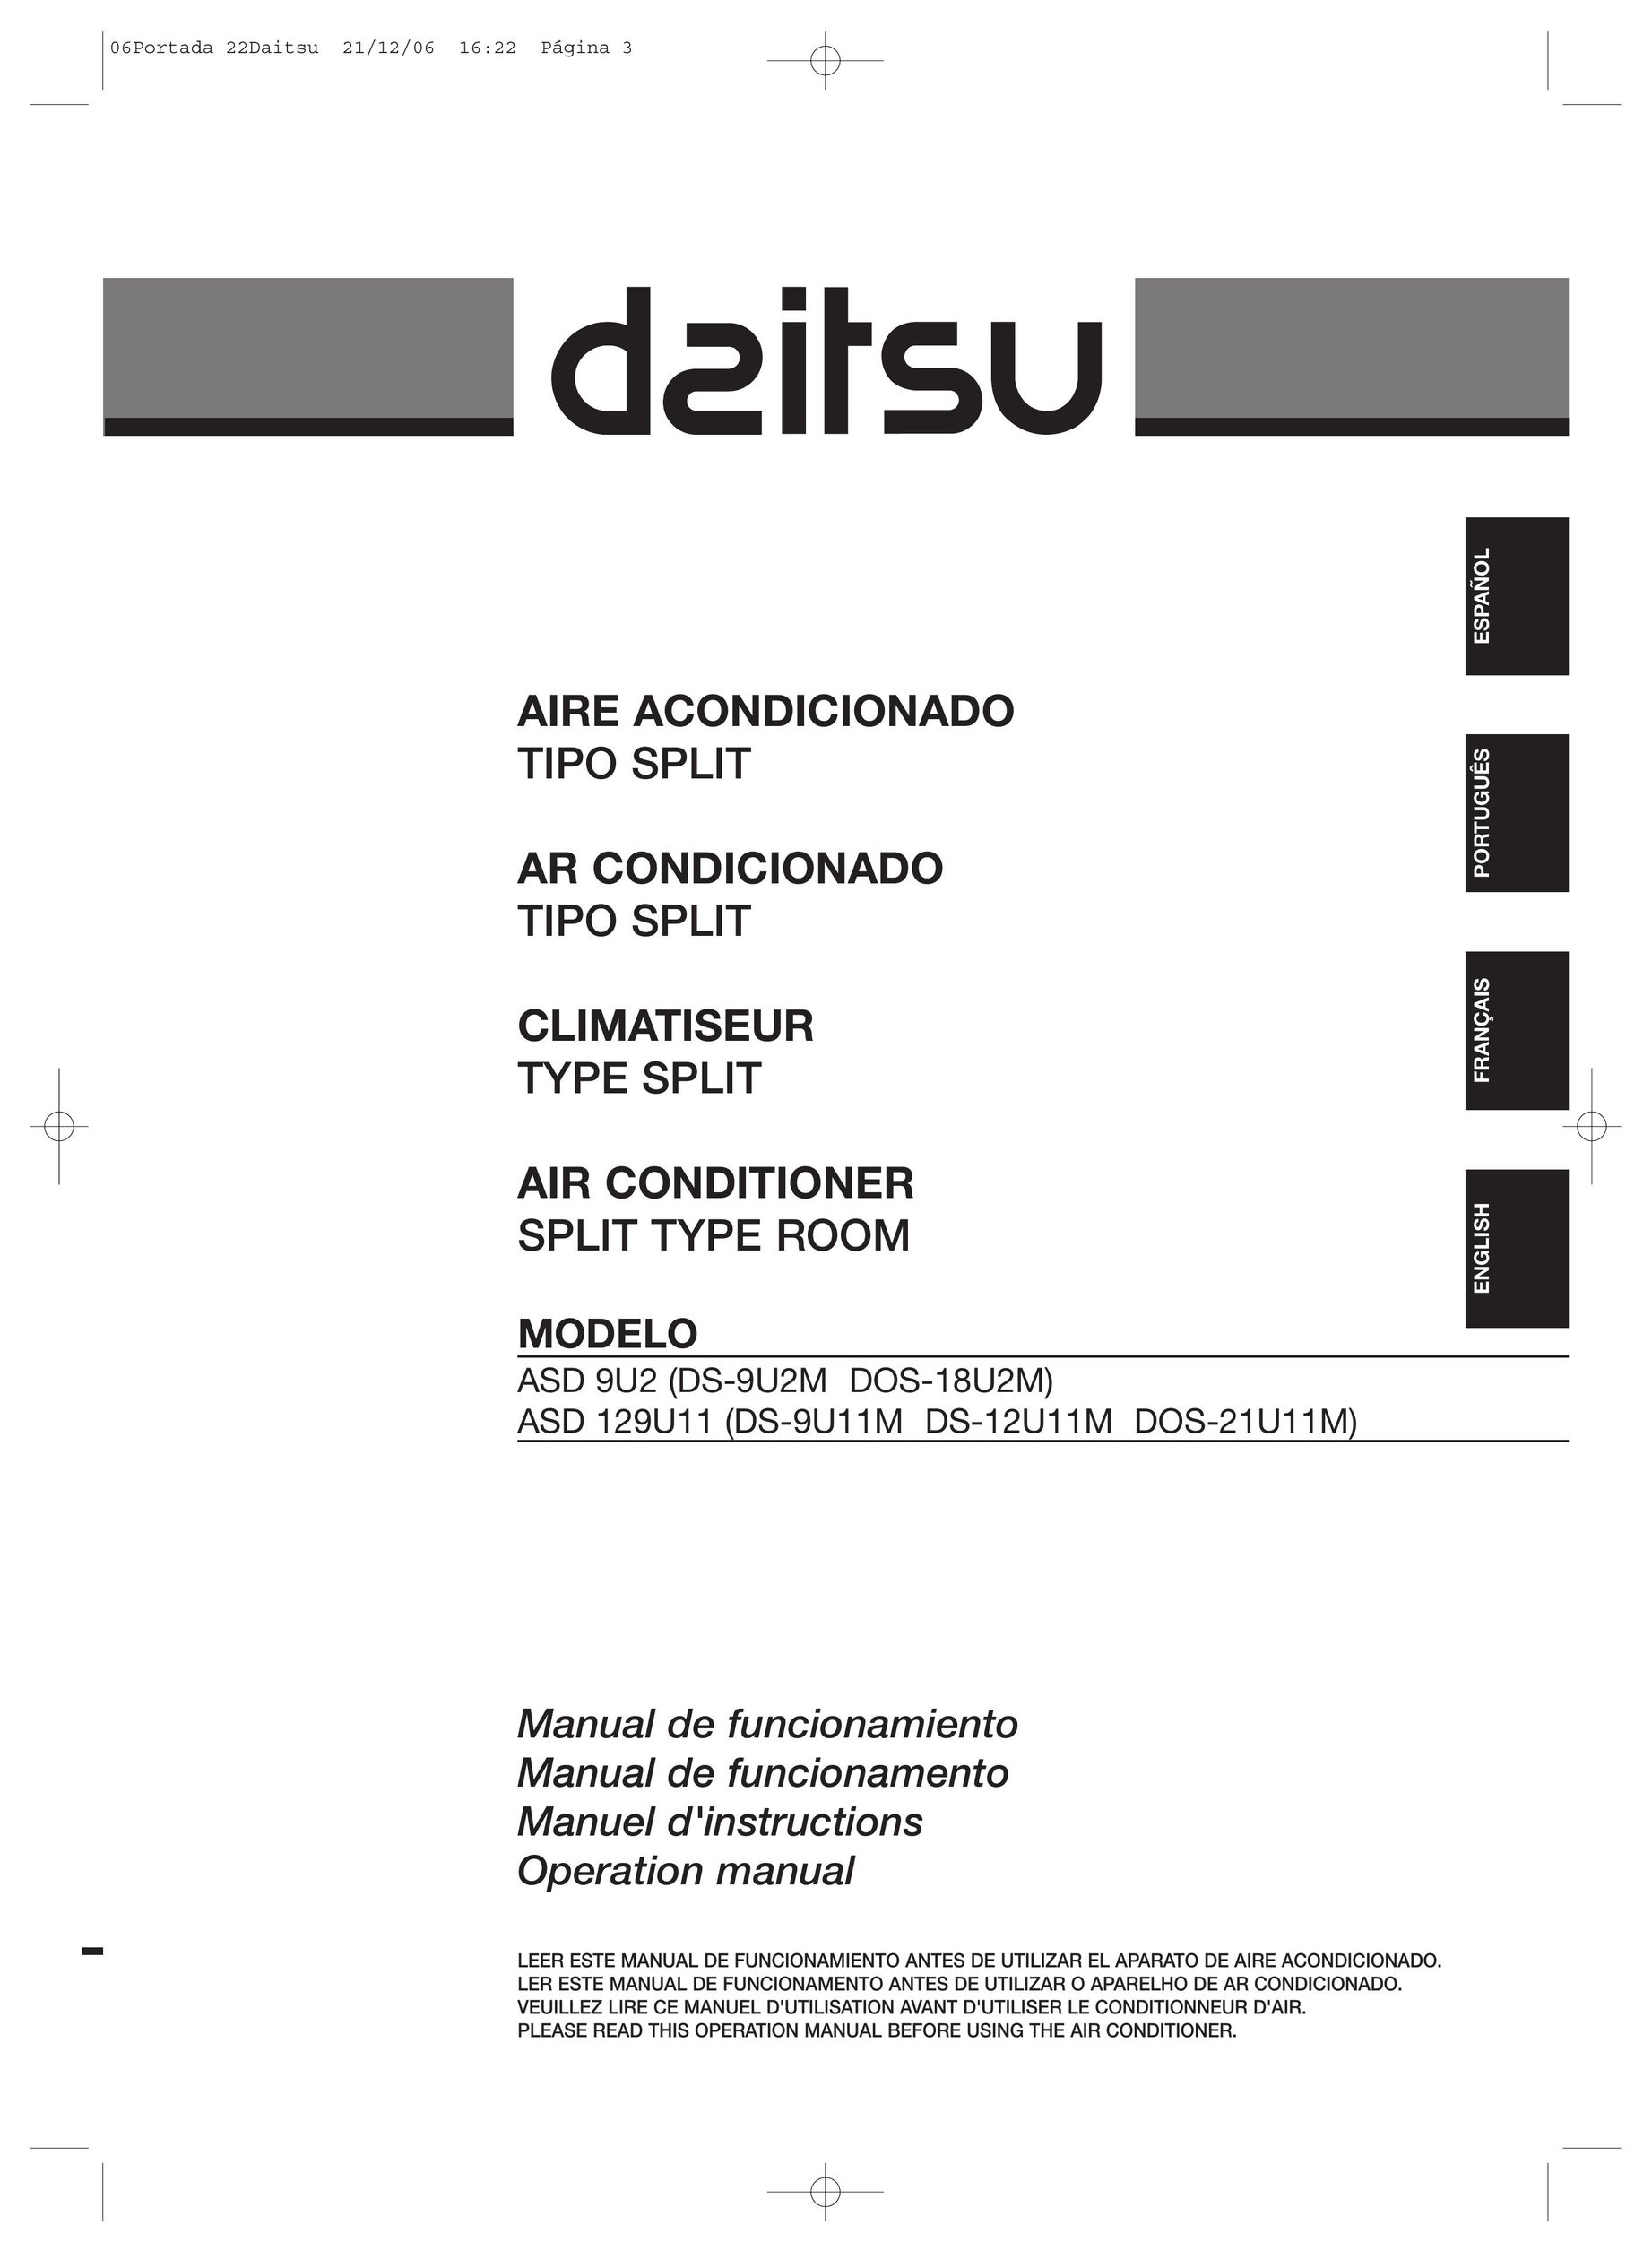 Daitsu ASD 129U11 Air Conditioner User Manual